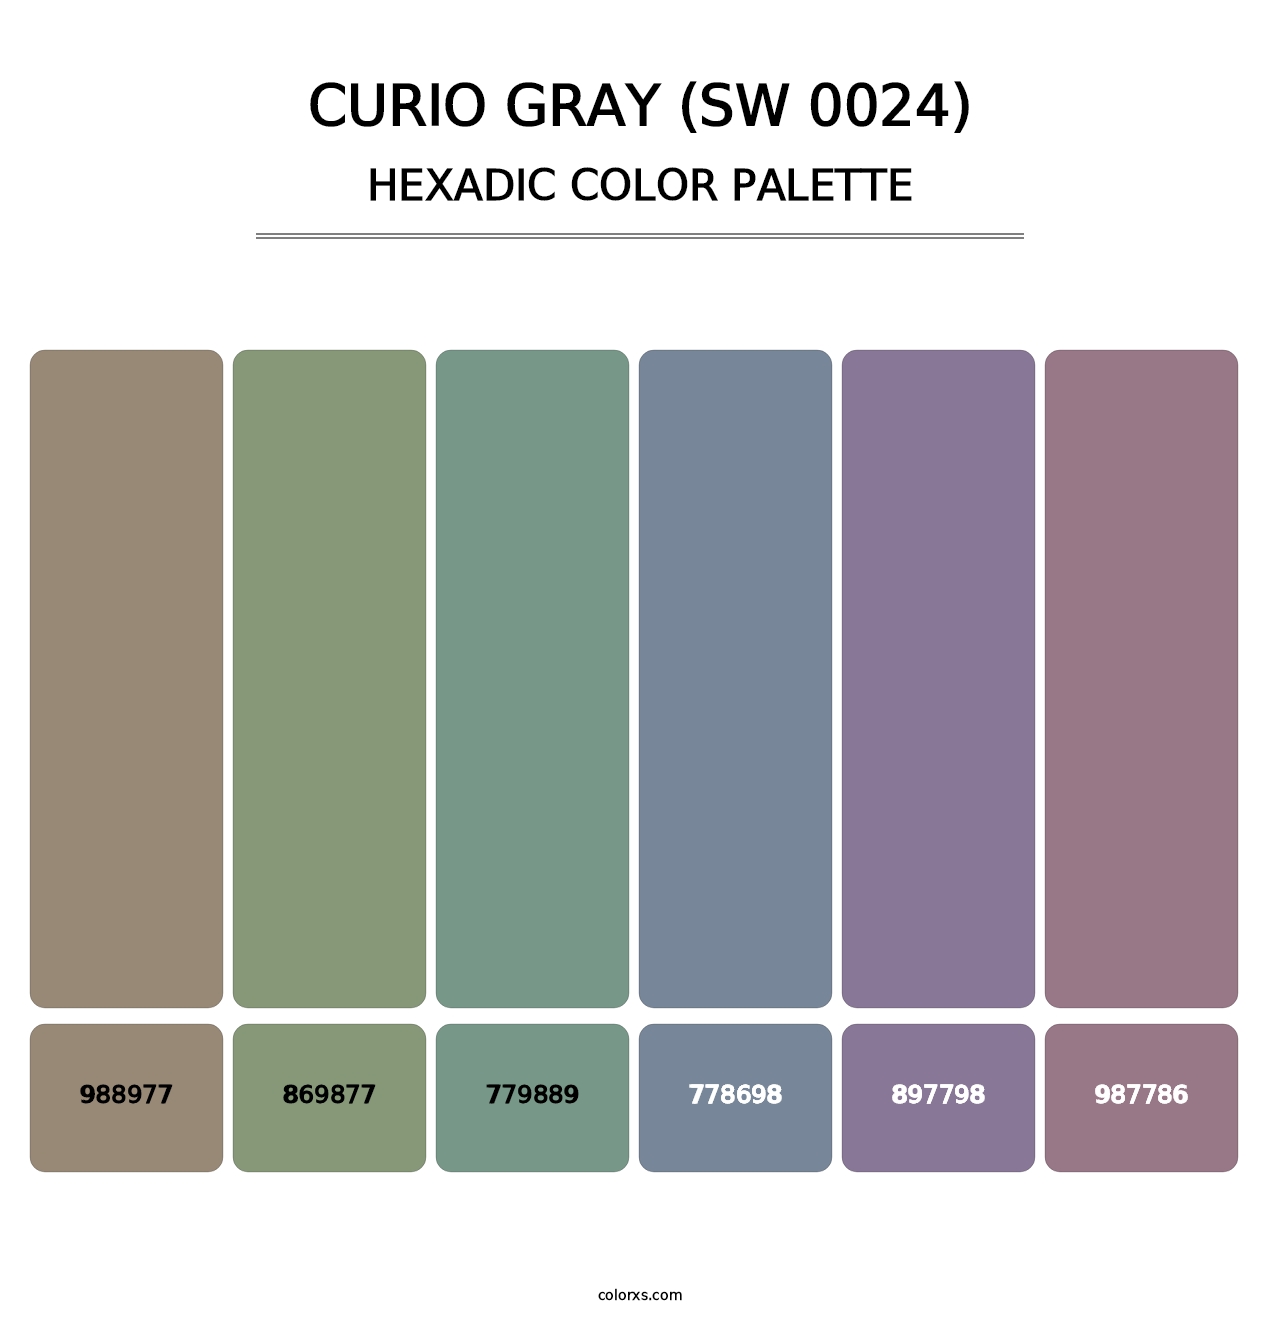 Curio Gray (SW 0024) - Hexadic Color Palette